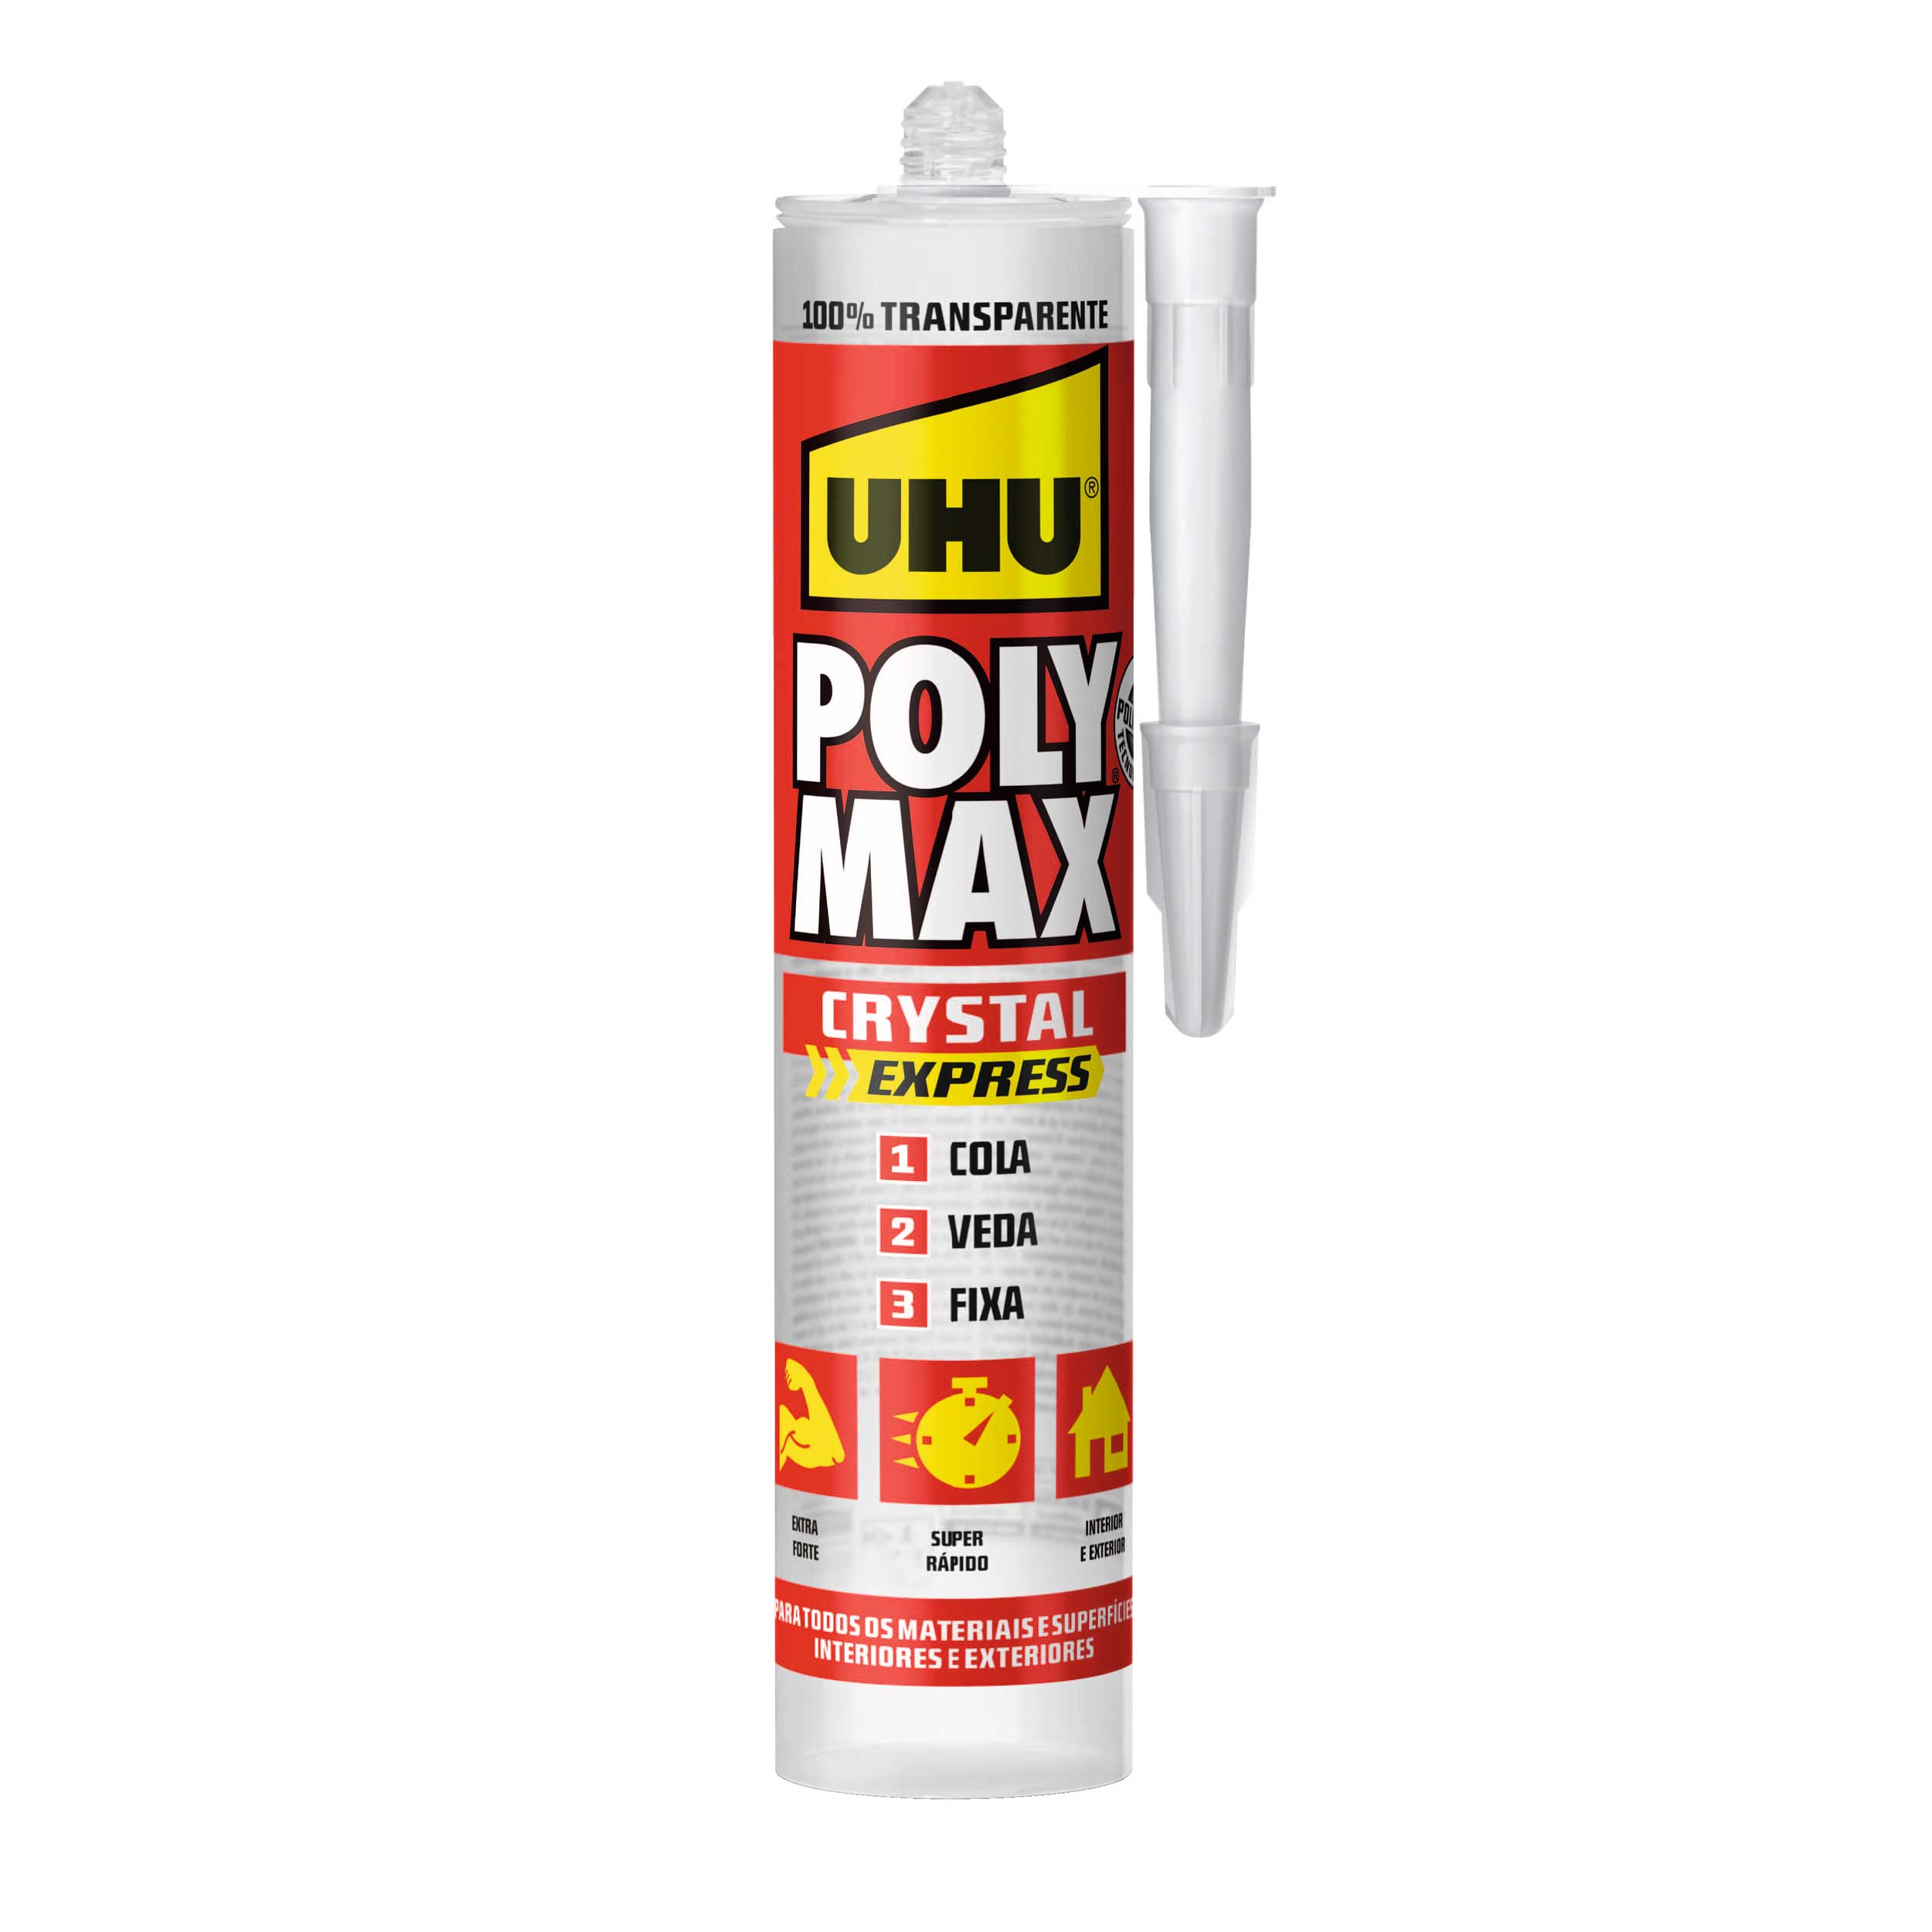 POLY MAX CRISTAL EXPRESS 300G PT UHU